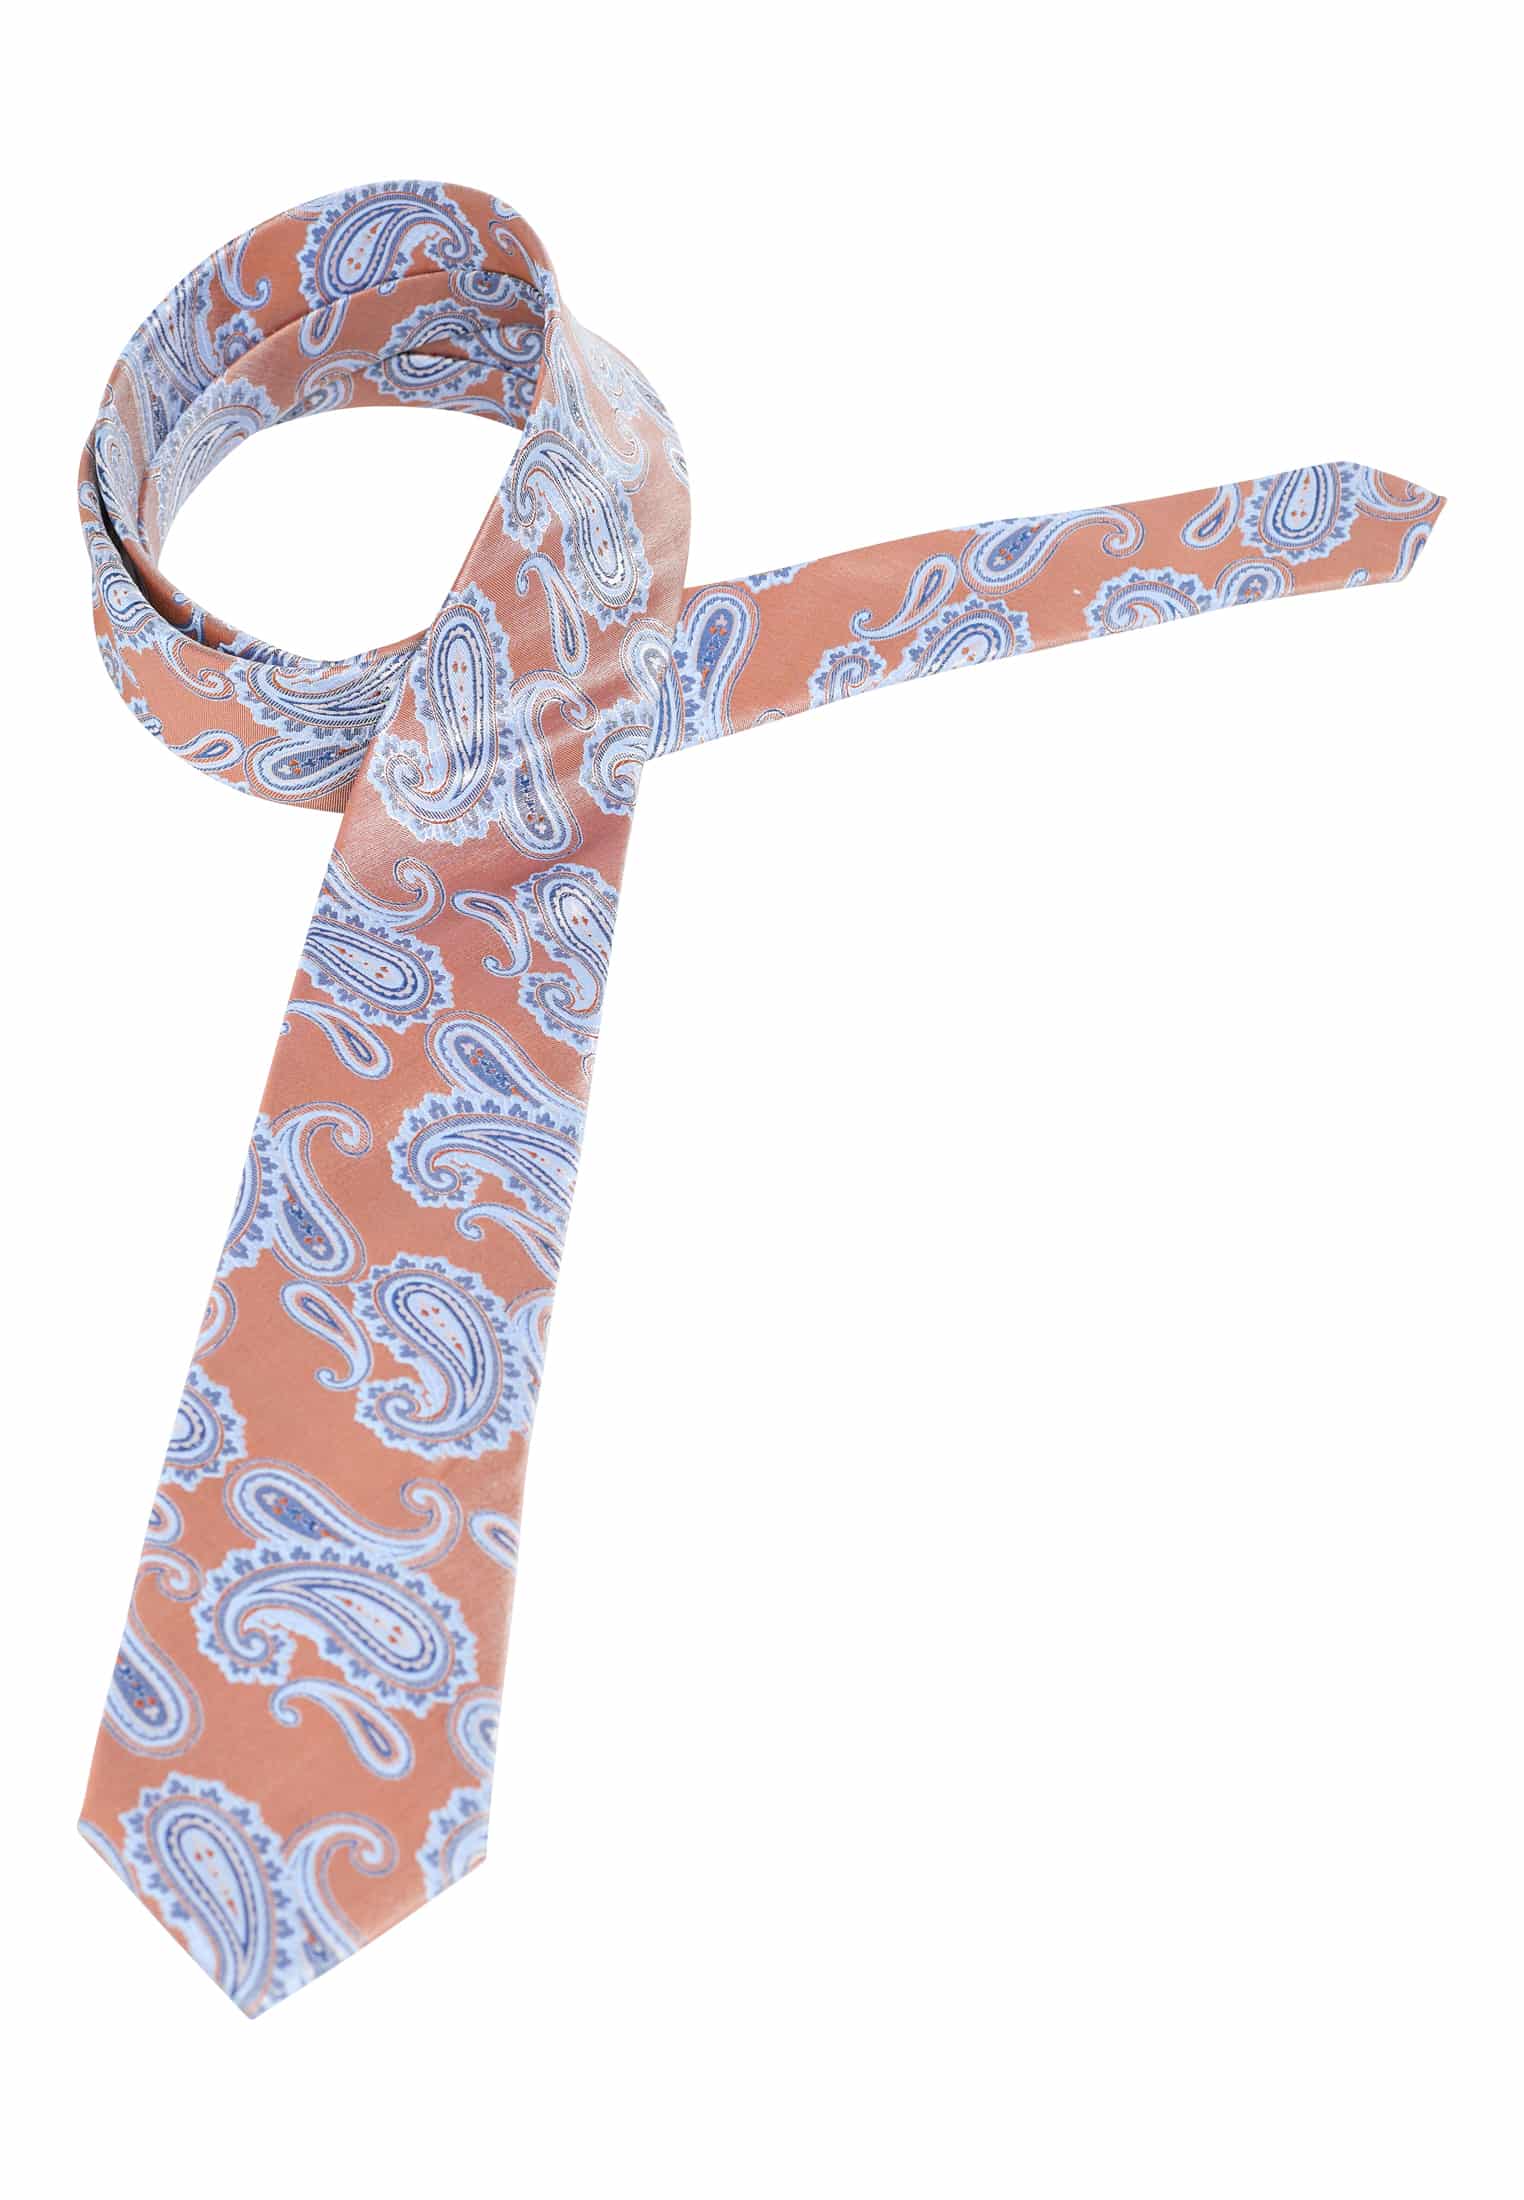 Krawatte in kupfer 1AC01967-97-72-142 | | gemustert 142 kupfer 